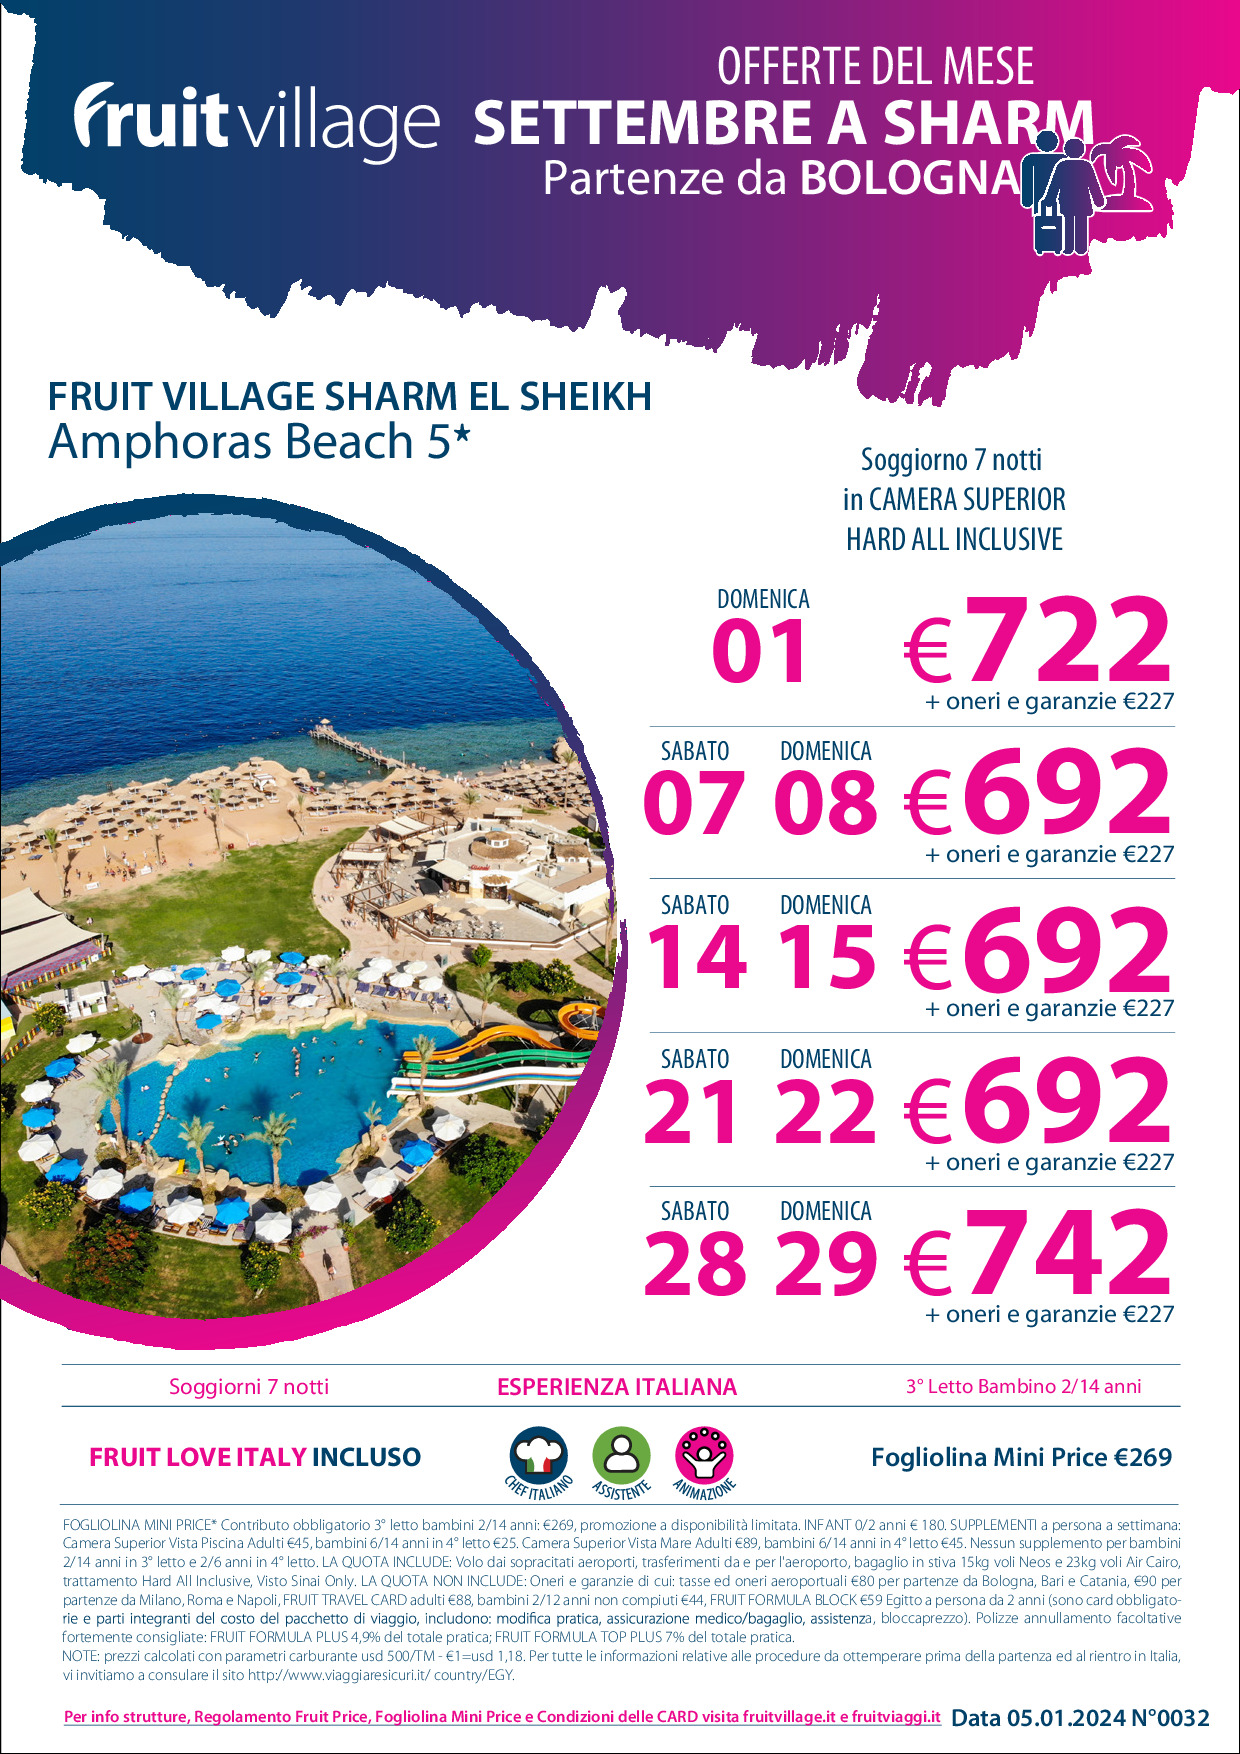 FRUIT VILLAGE Sharm Amphoras Beach 5* da Bologna a Settembre